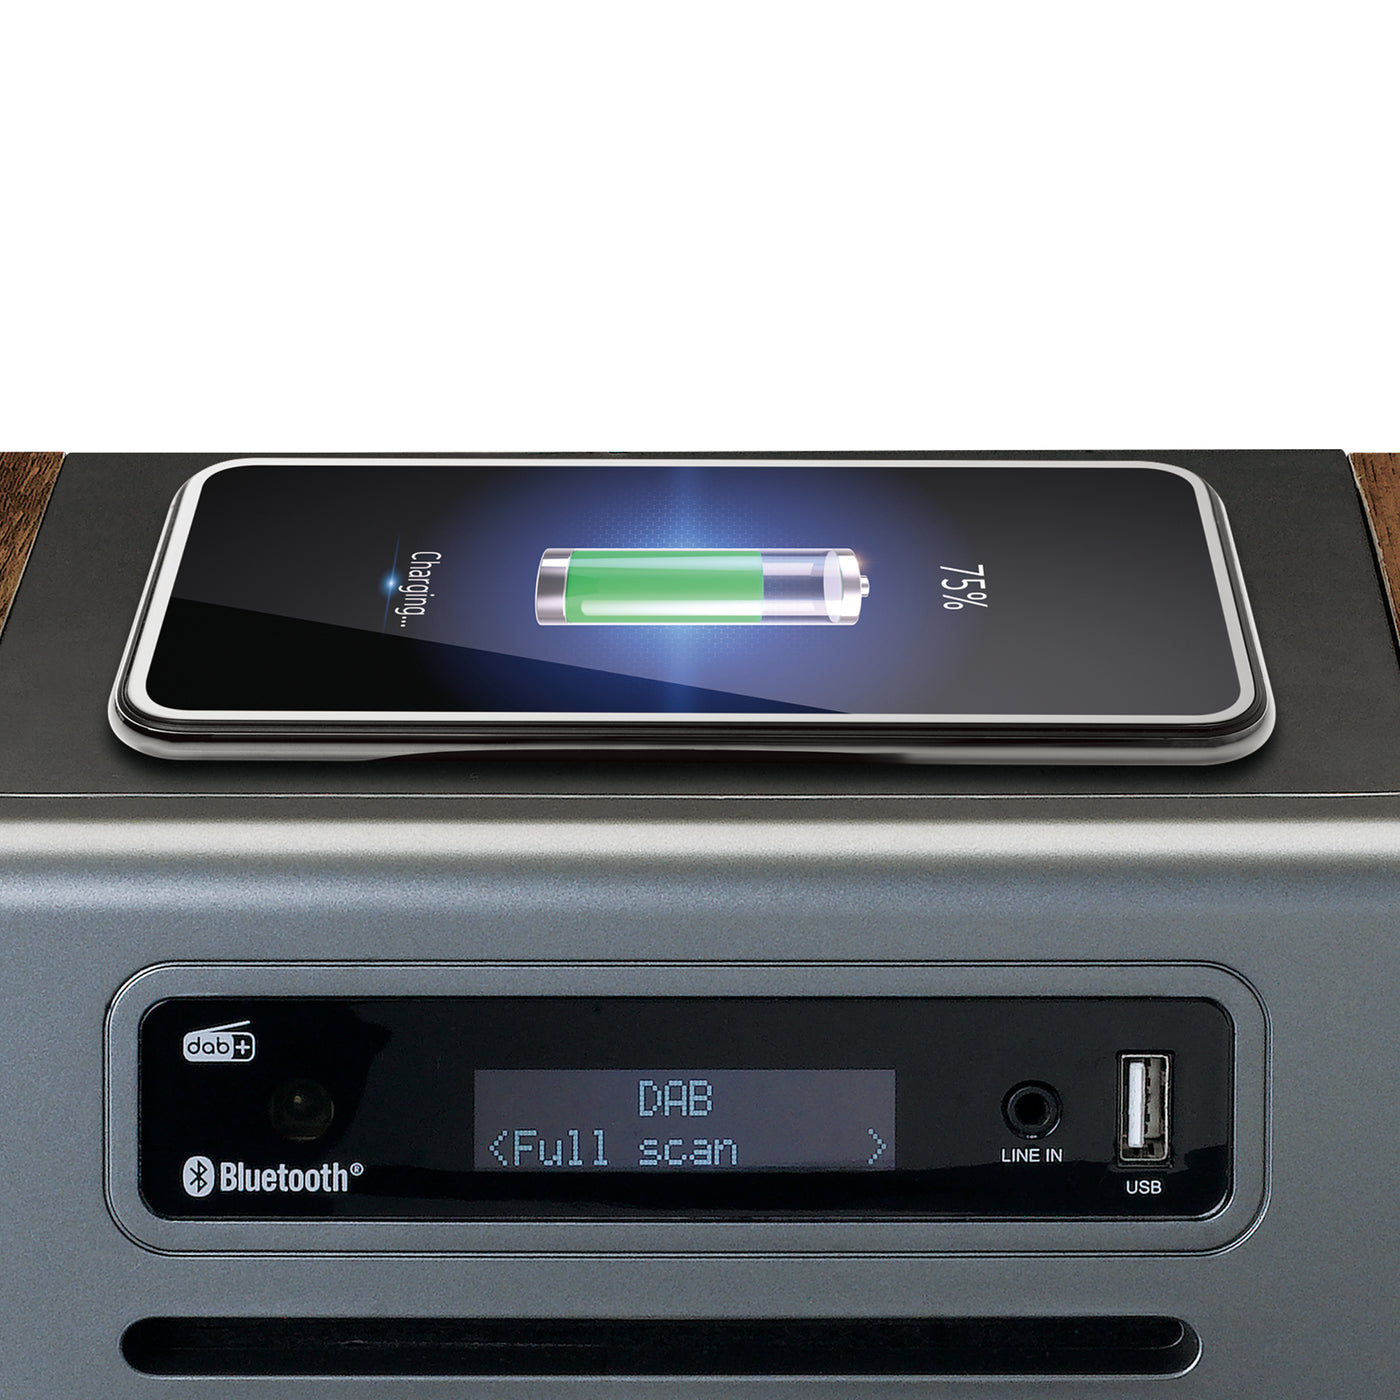 Lenco MC-175SI - Micro set avec DAB, FM, CD, 2 USB, Bluetooth®, QI, RC - Argent